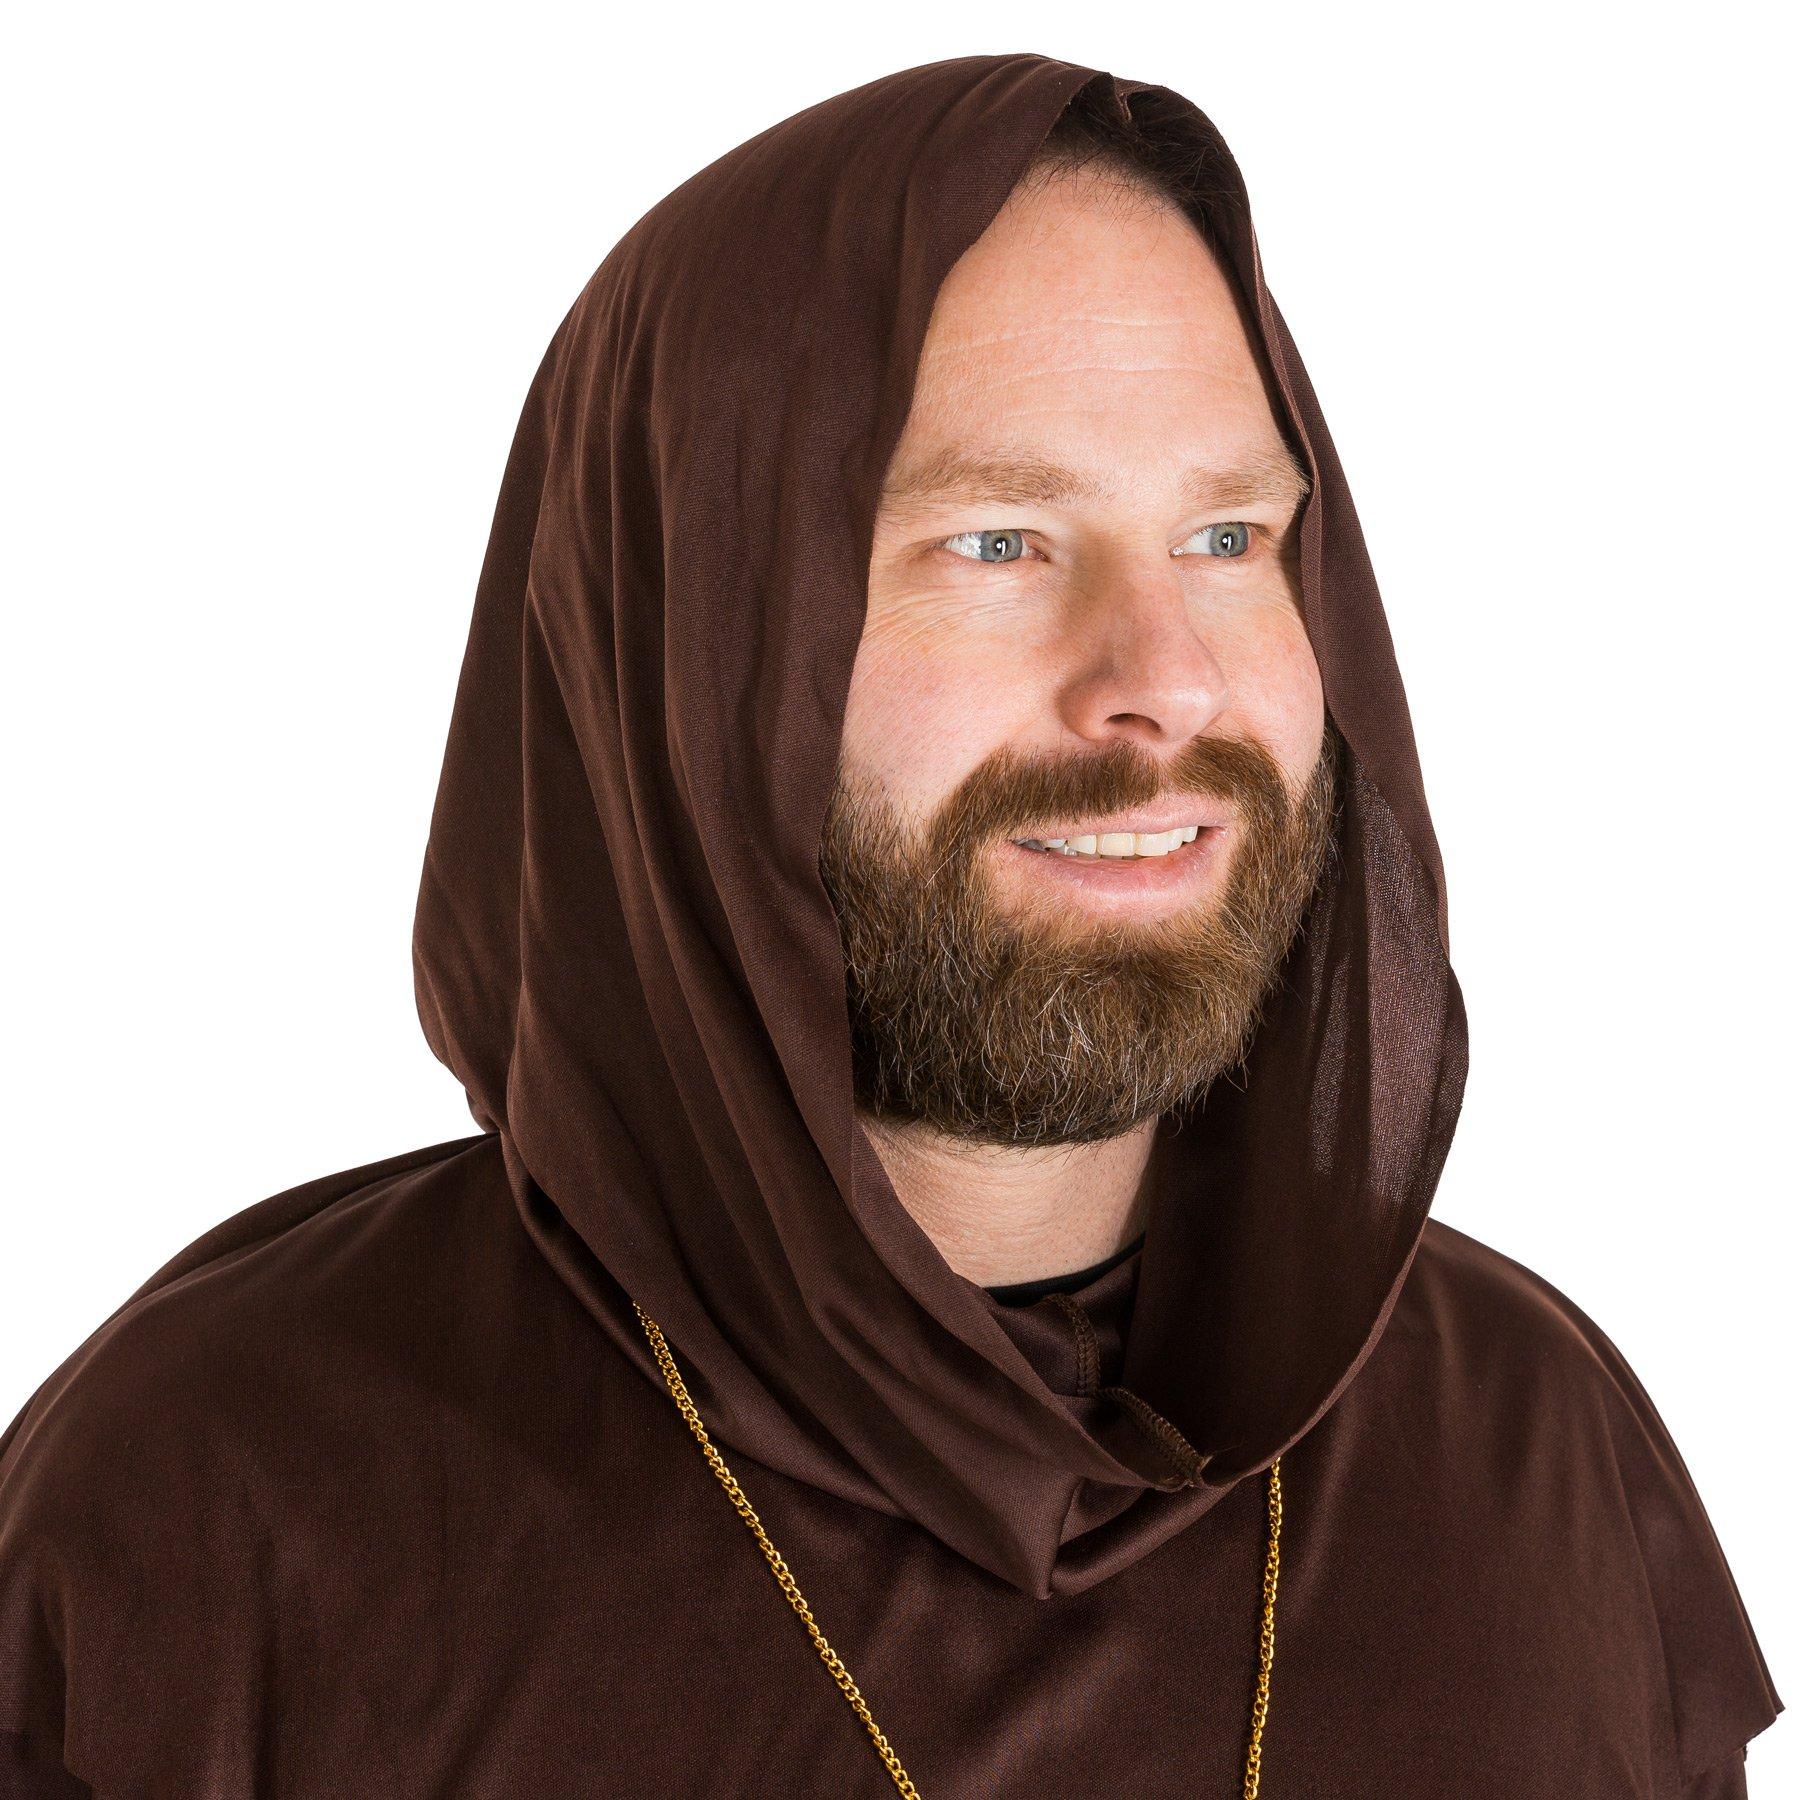 Tectake  Costume da uomo - Saio da monaco 